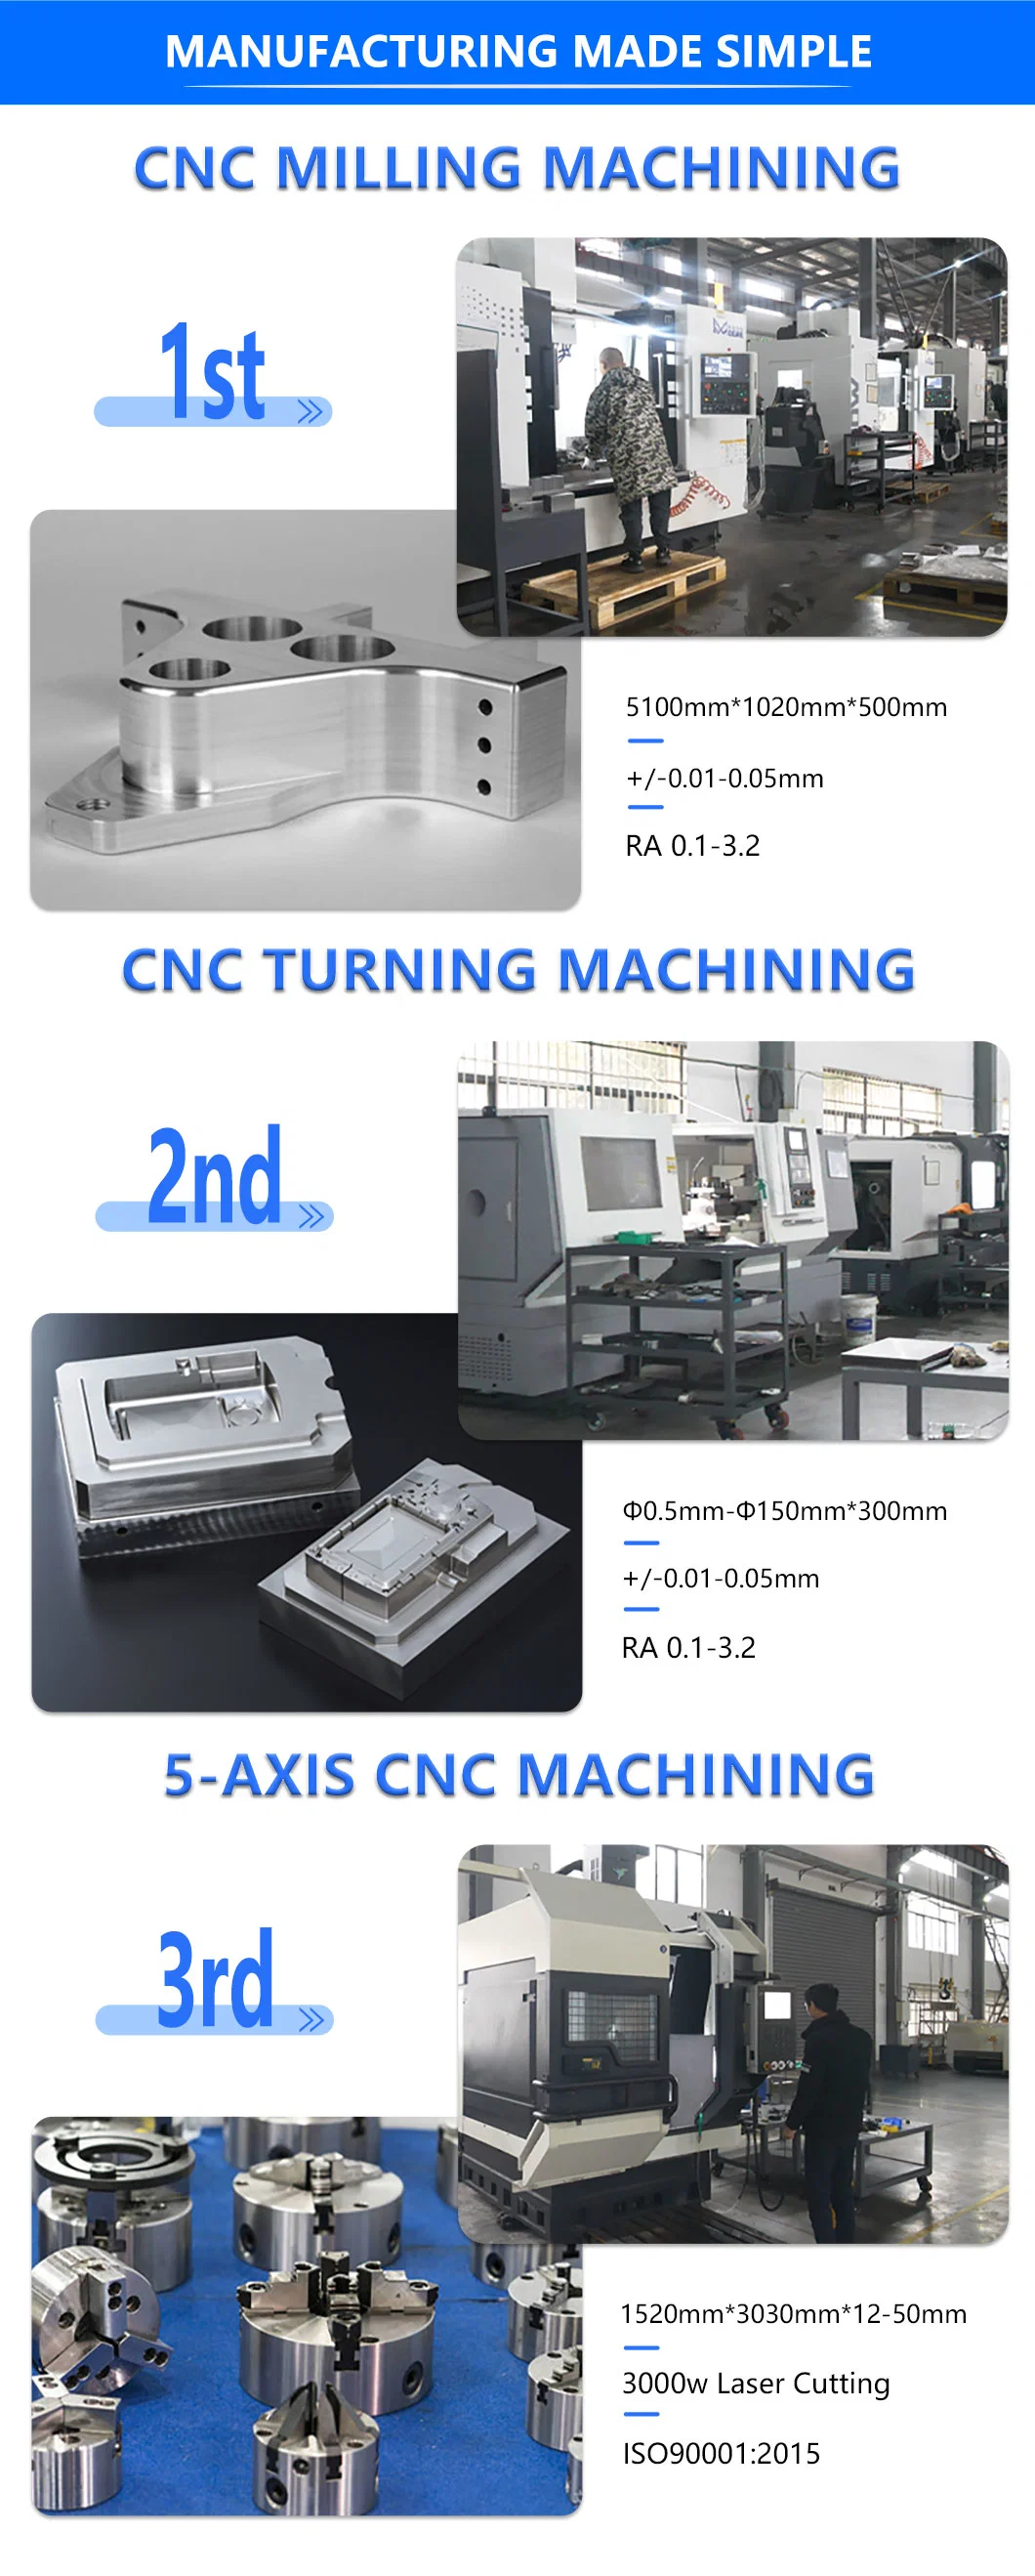 Customized Precision CNC Processing Carbon Steel Aluminum Extrusion Mechanical Parts